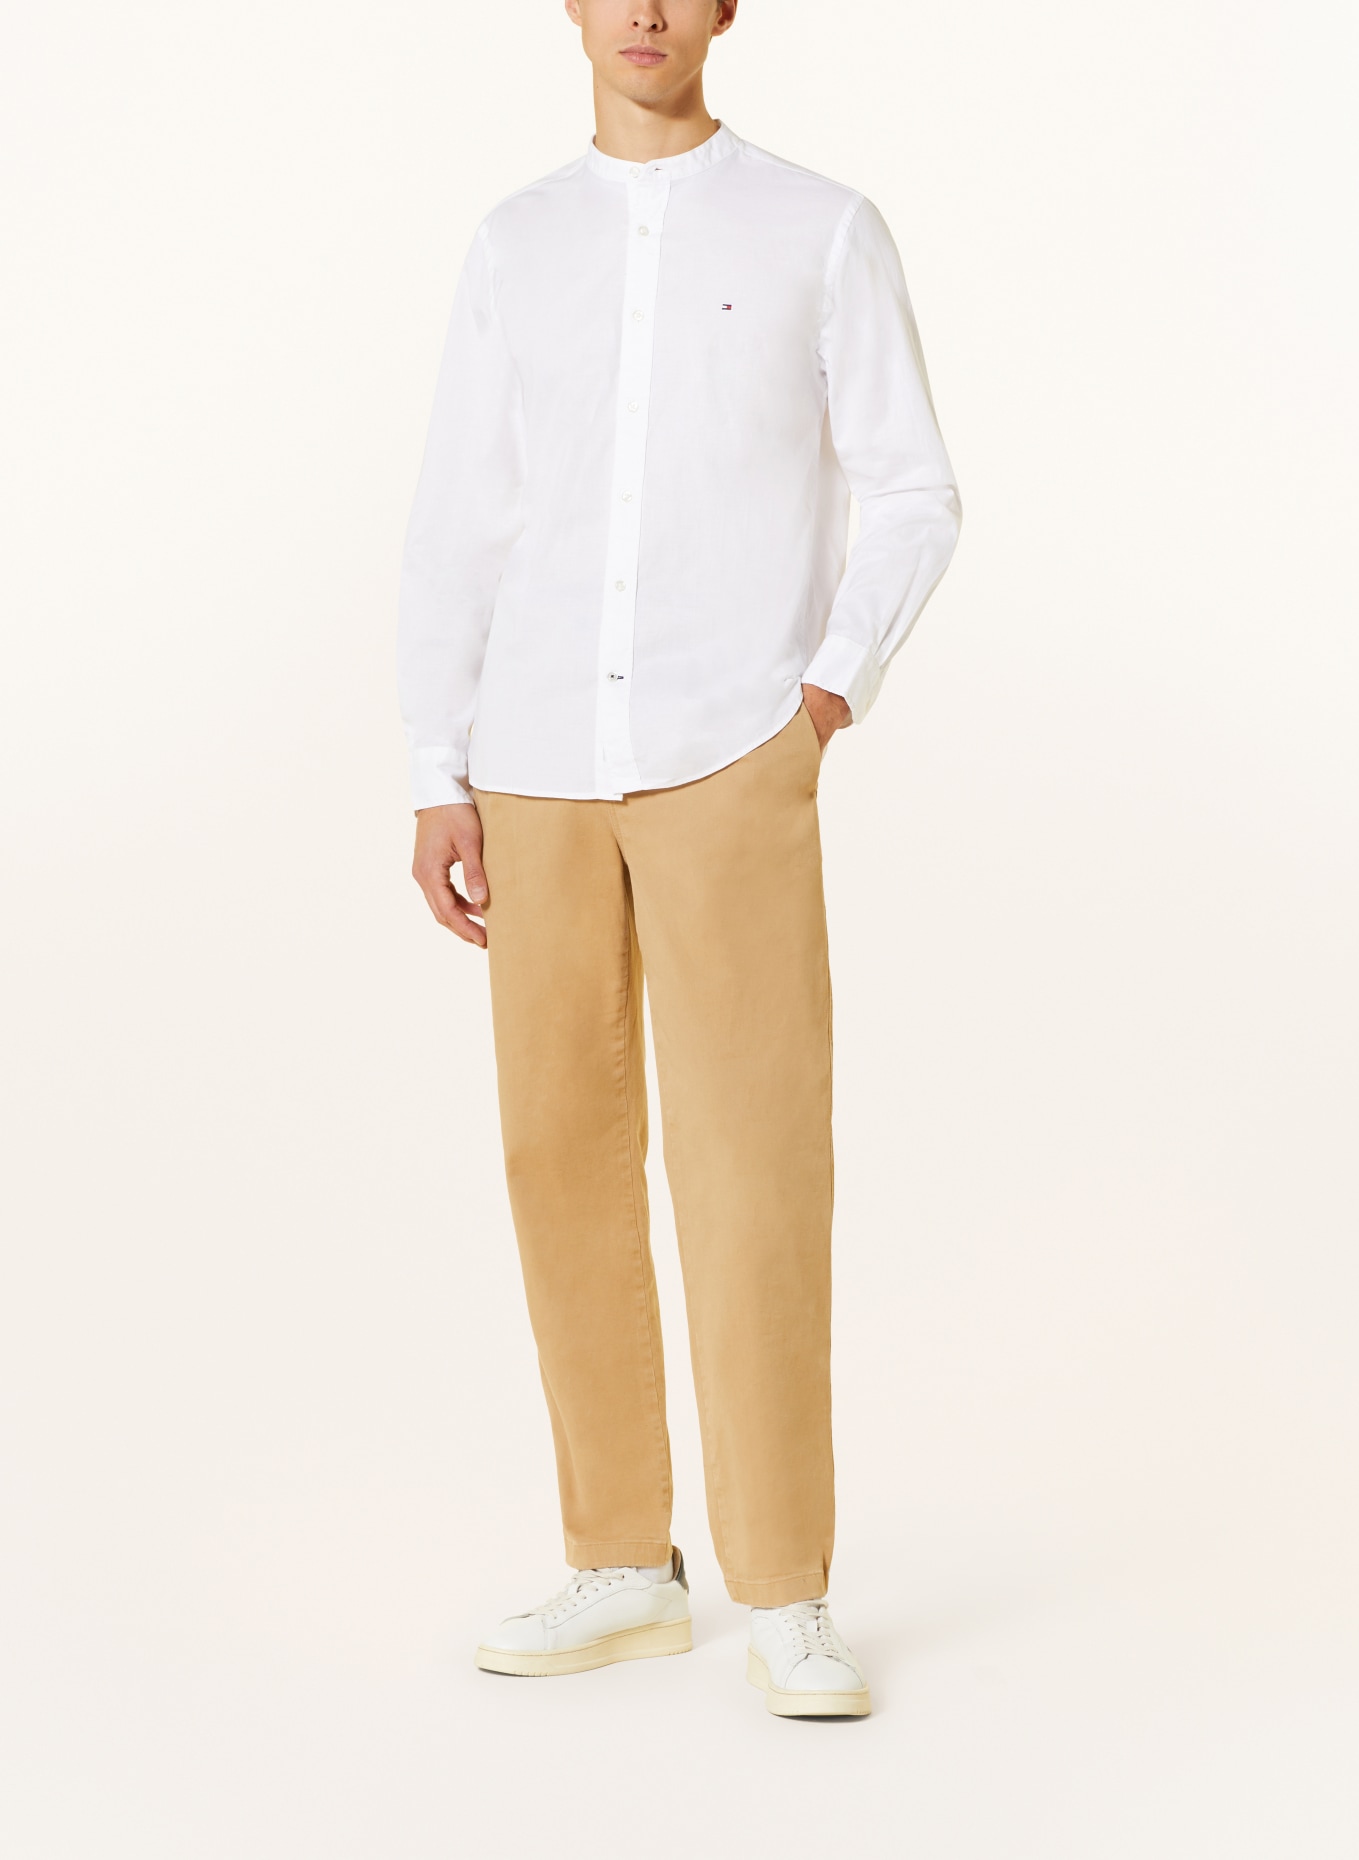 TOMMY HILFIGER Hemd Regular Fit, Farbe: WEISS (Bild 2)